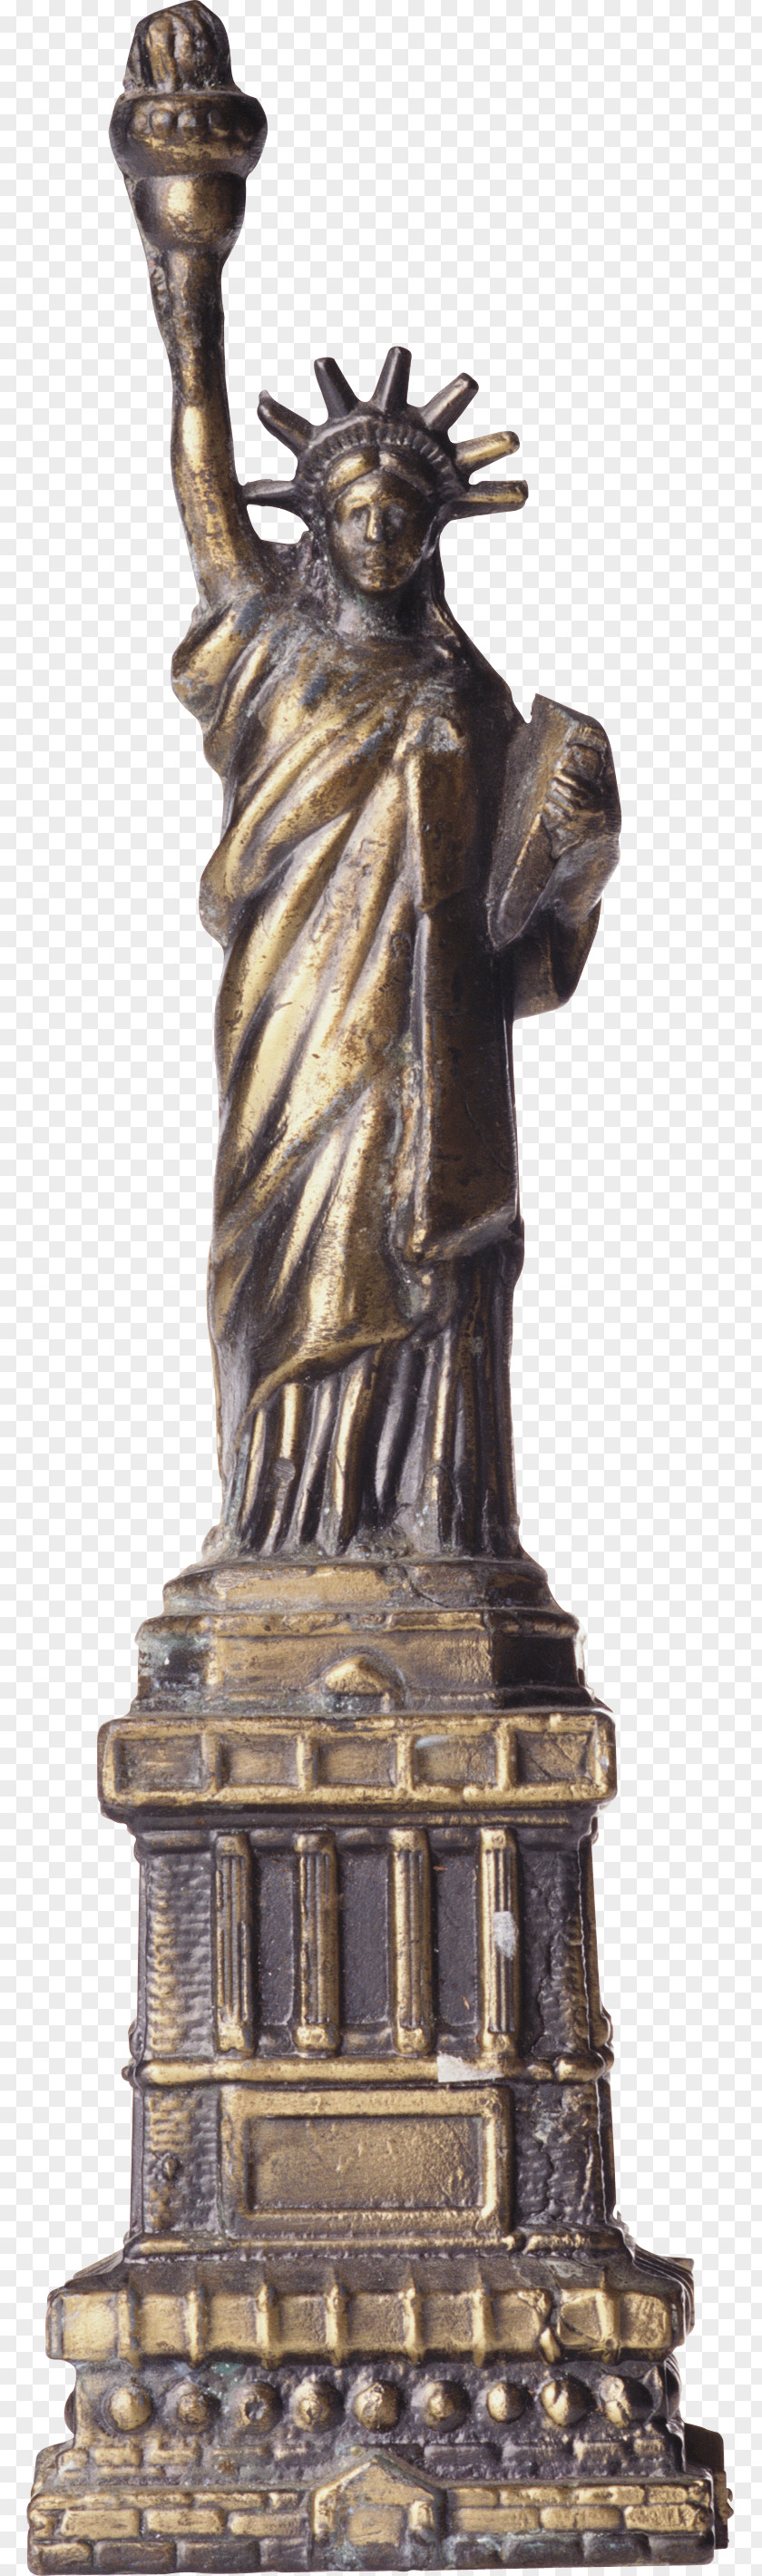 Statue Of Liberty Bronze Sculpture Figurine PNG